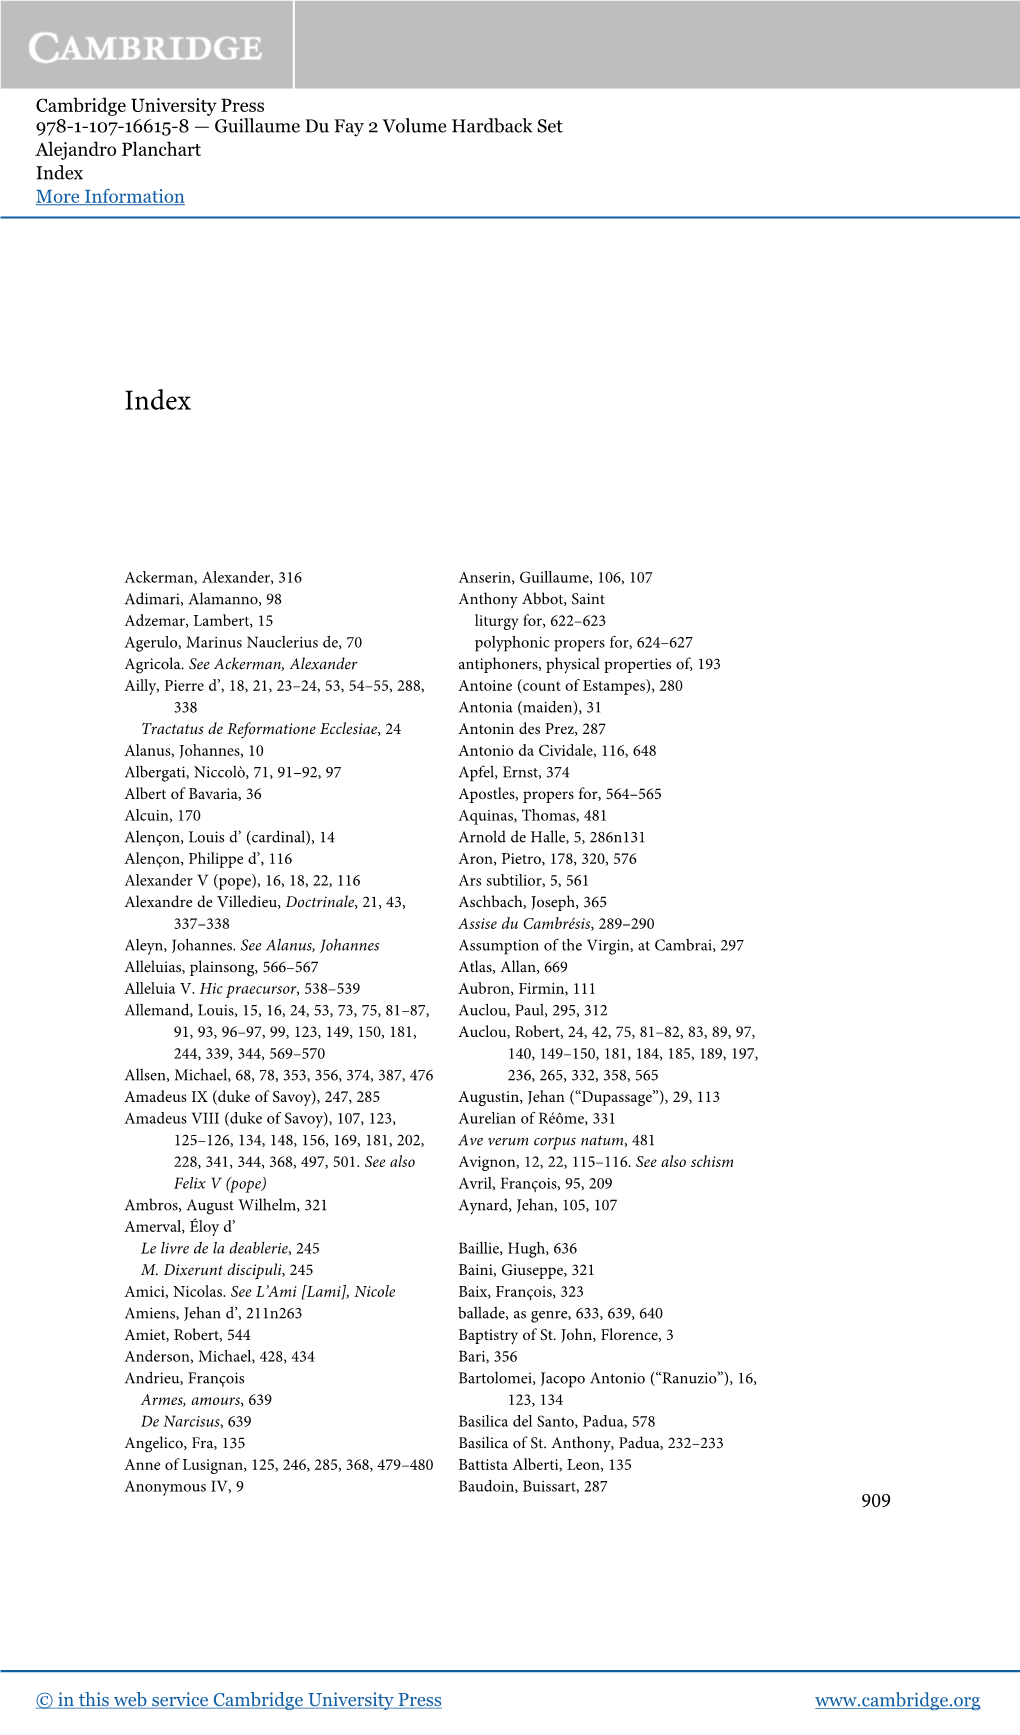 Cambridge University Press 978-1-107-16615-8 — Guillaume Du Fay 2 Volume Hardback Set Alejandro Planchart Index More Information